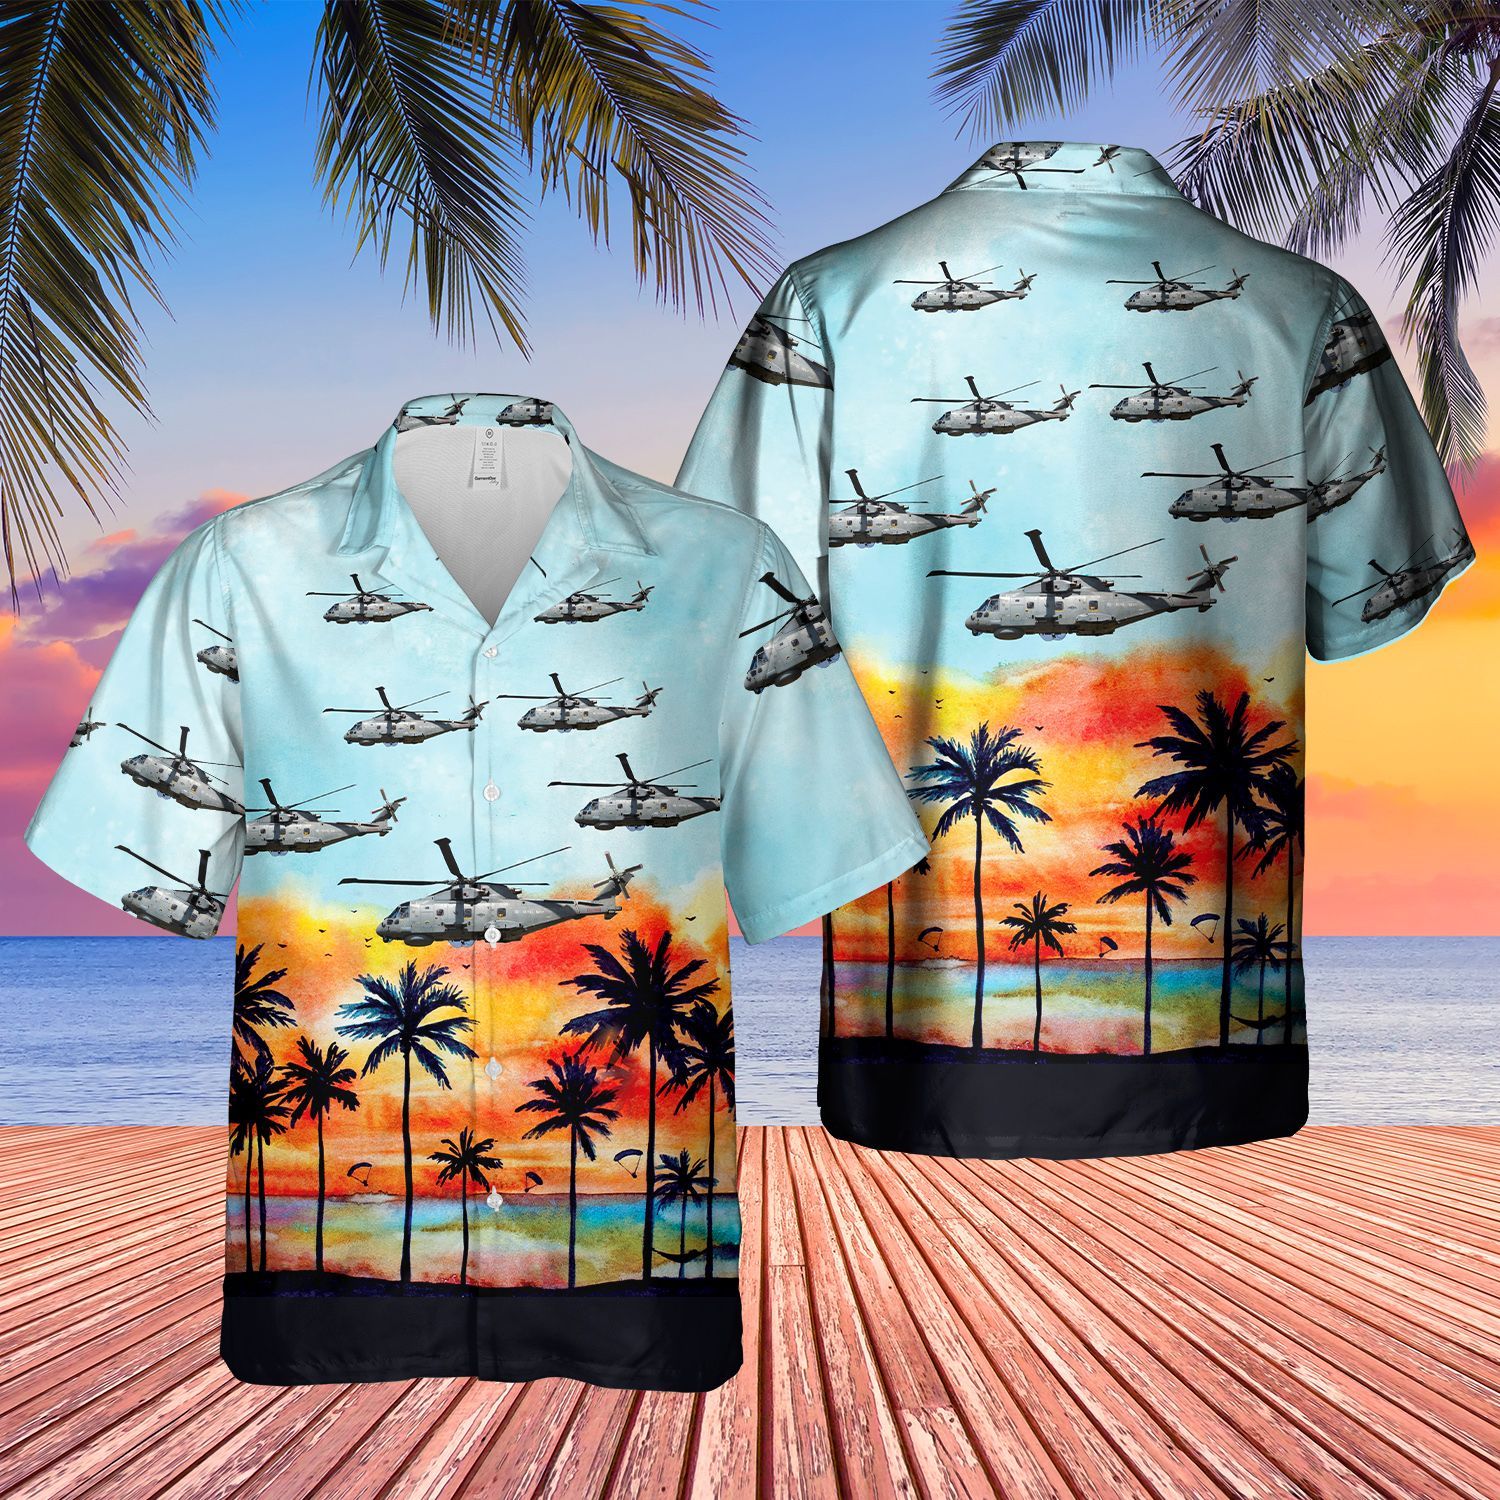 Enjoy your summer with top cool hawaiian shirt below 177